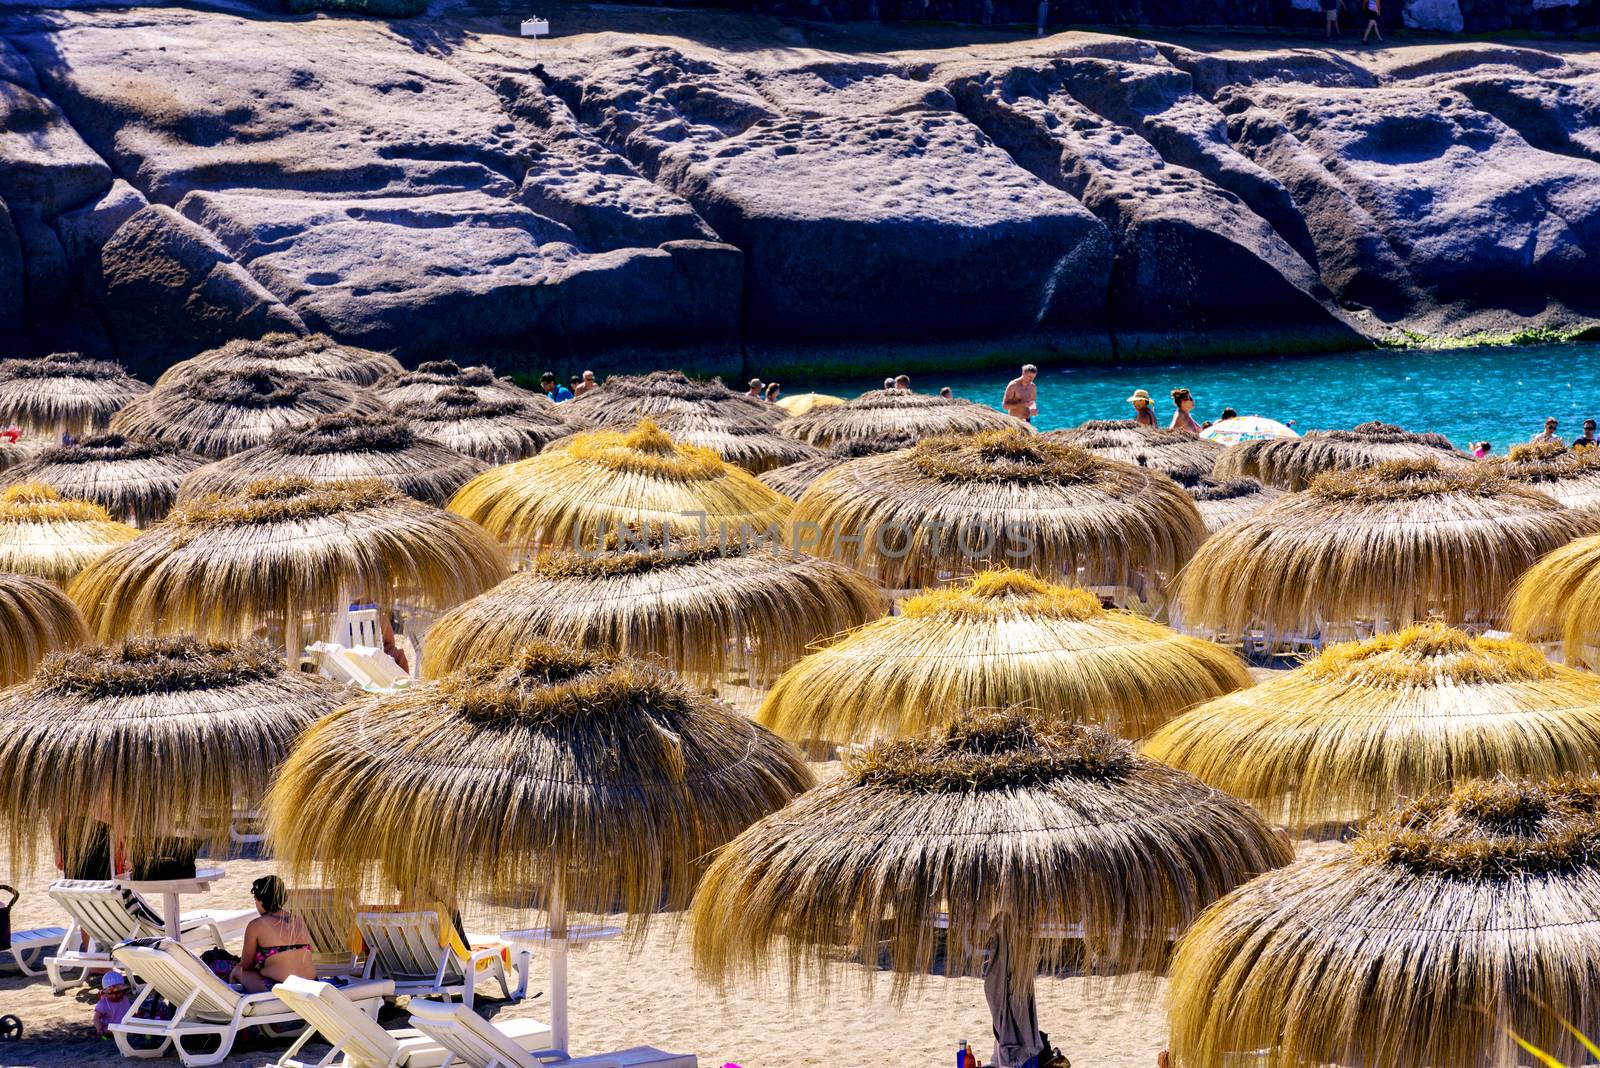 Straw umbrellas on Tenerife beach by Nanisimova